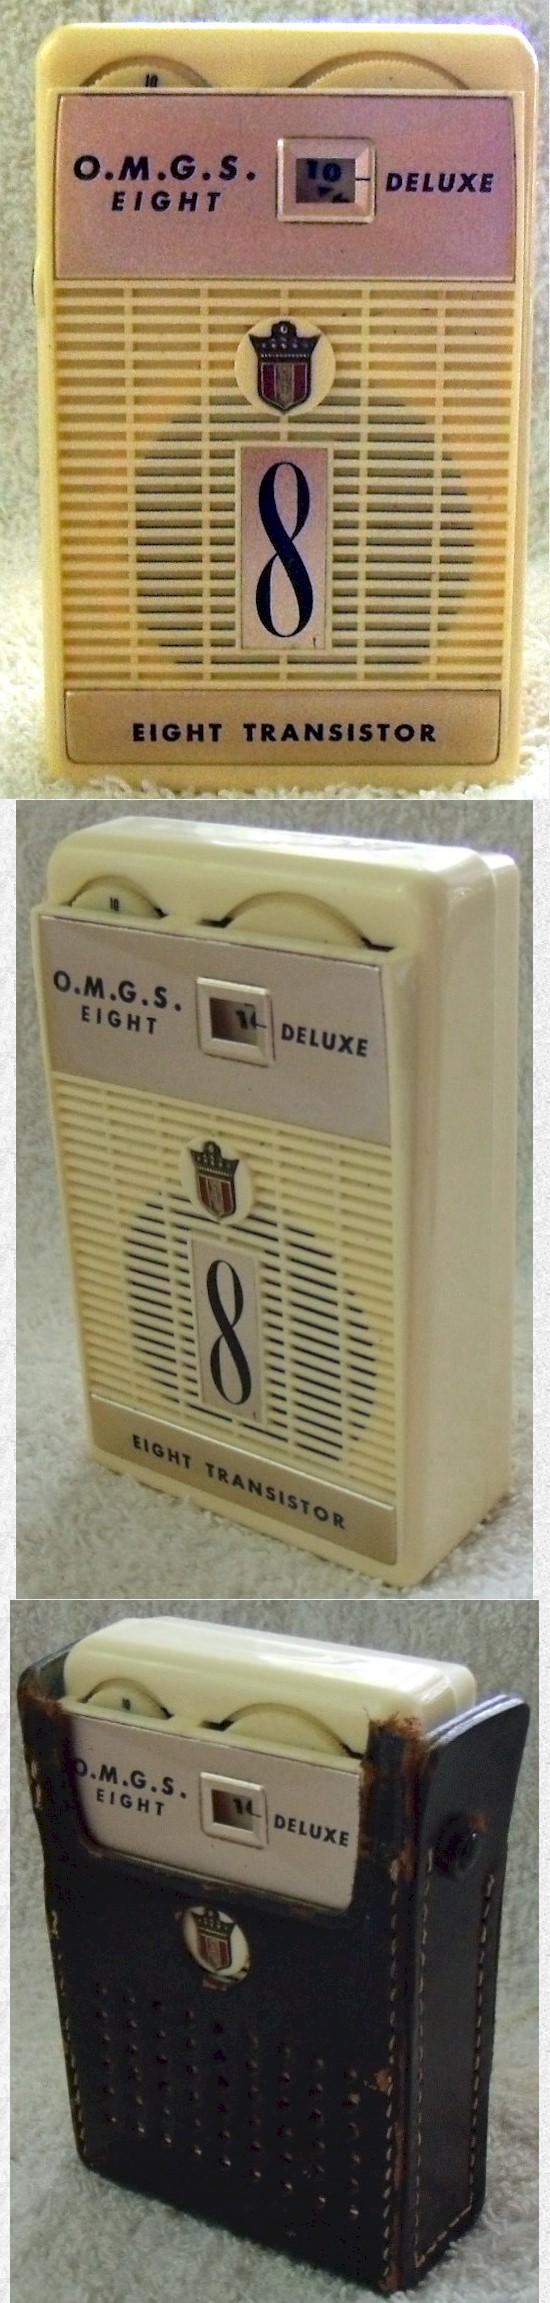 O.M.G.S. Deluxe Pocket Transistor (1960)